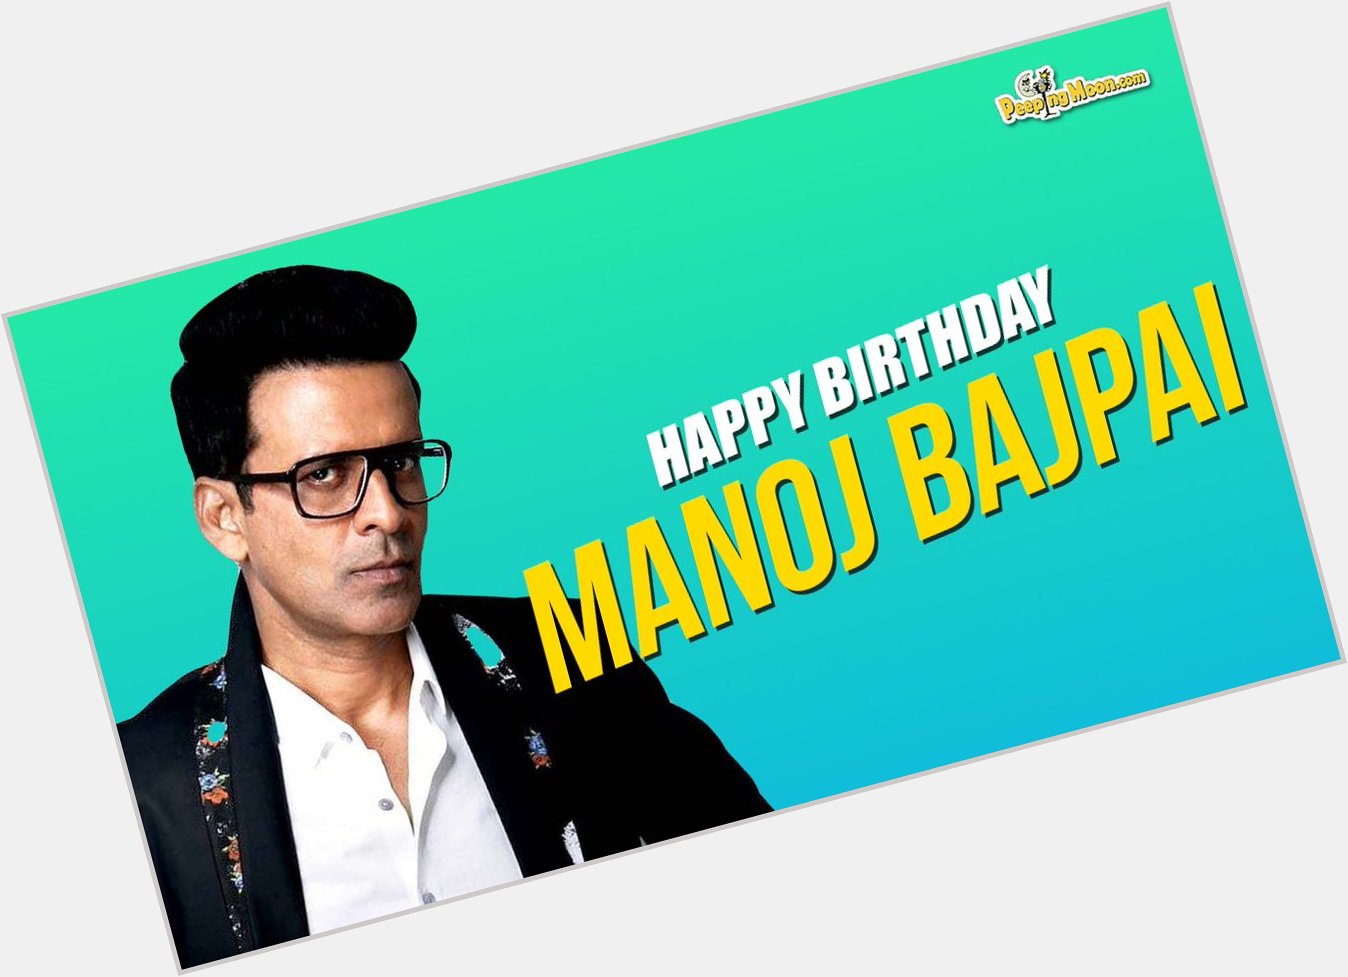 Wishing the very talented Manoj Bajpayee a very Happy Birthday!  